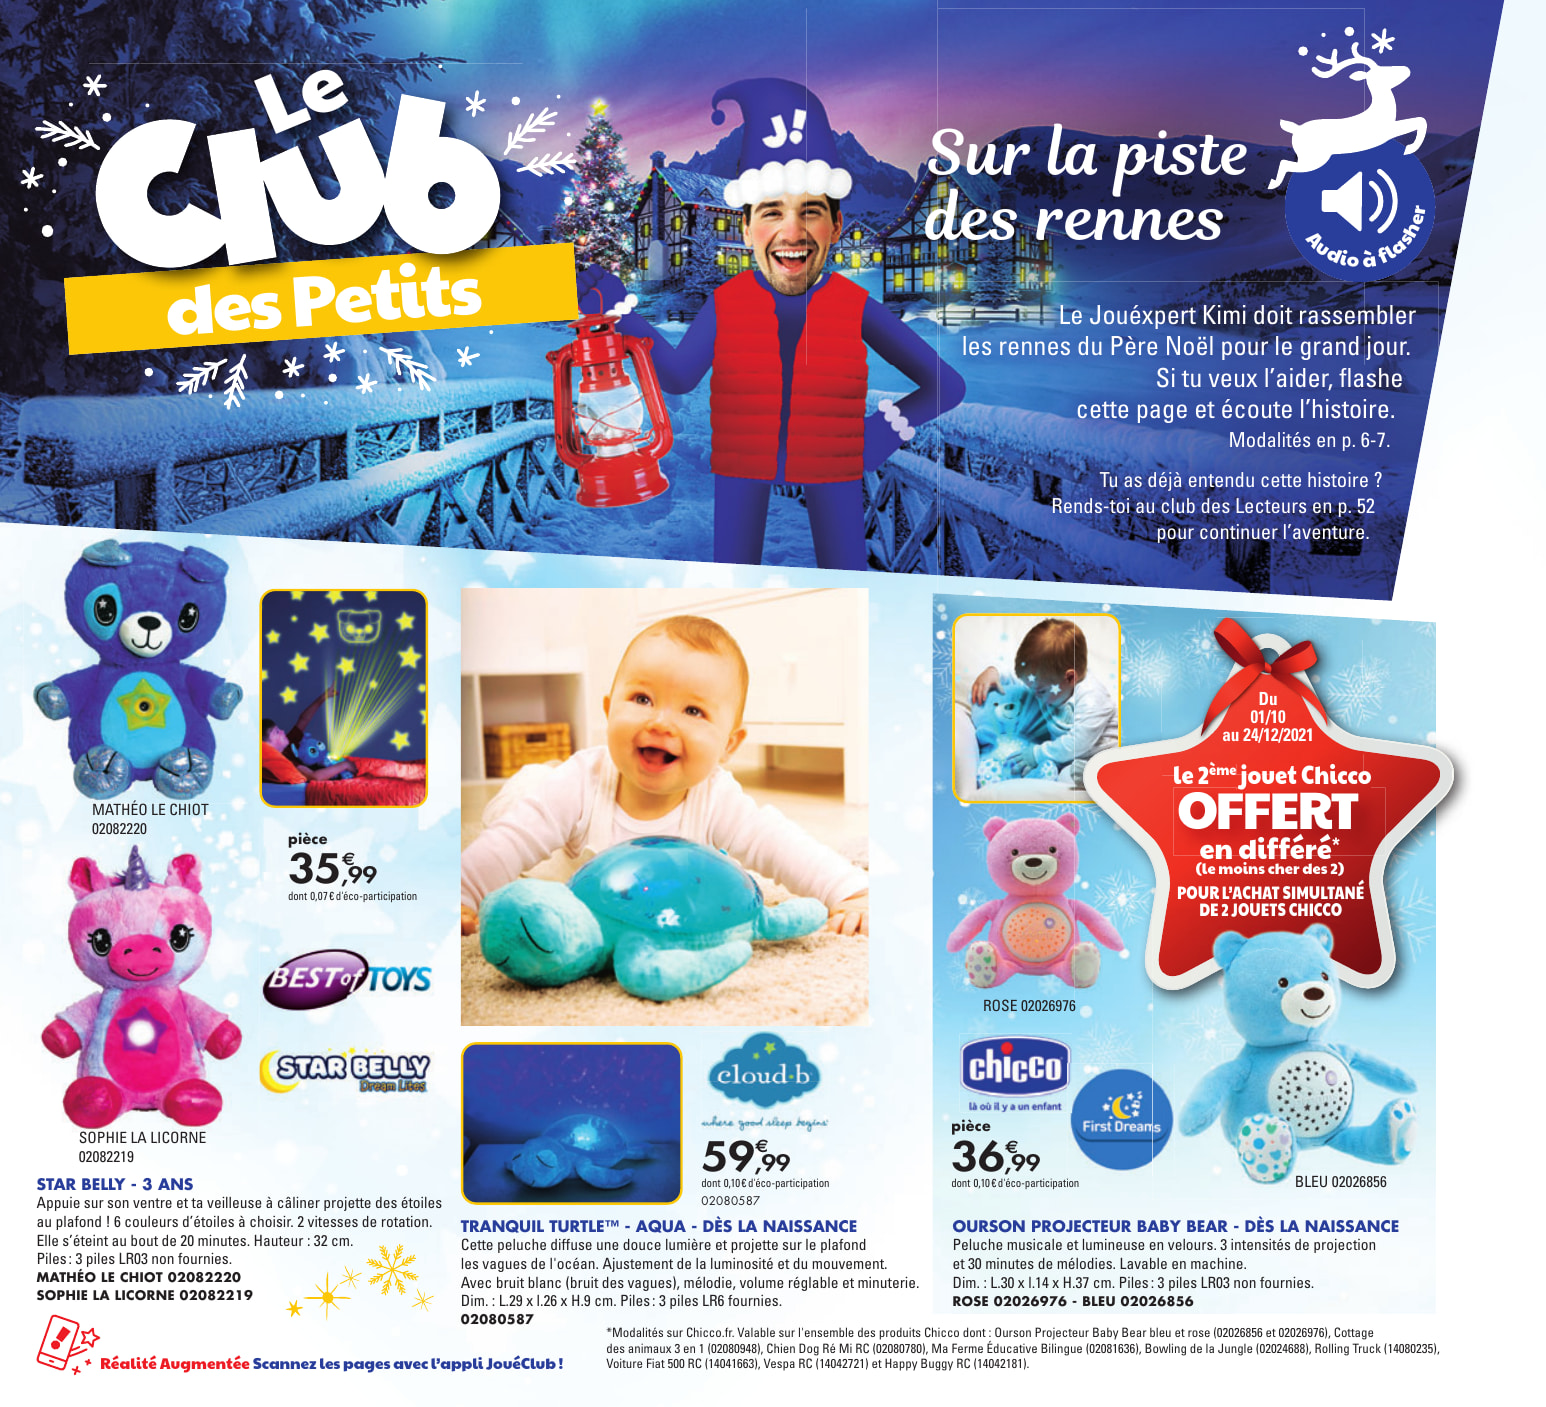 Catalogue Noël 2021 - JouéClub! - Réunion